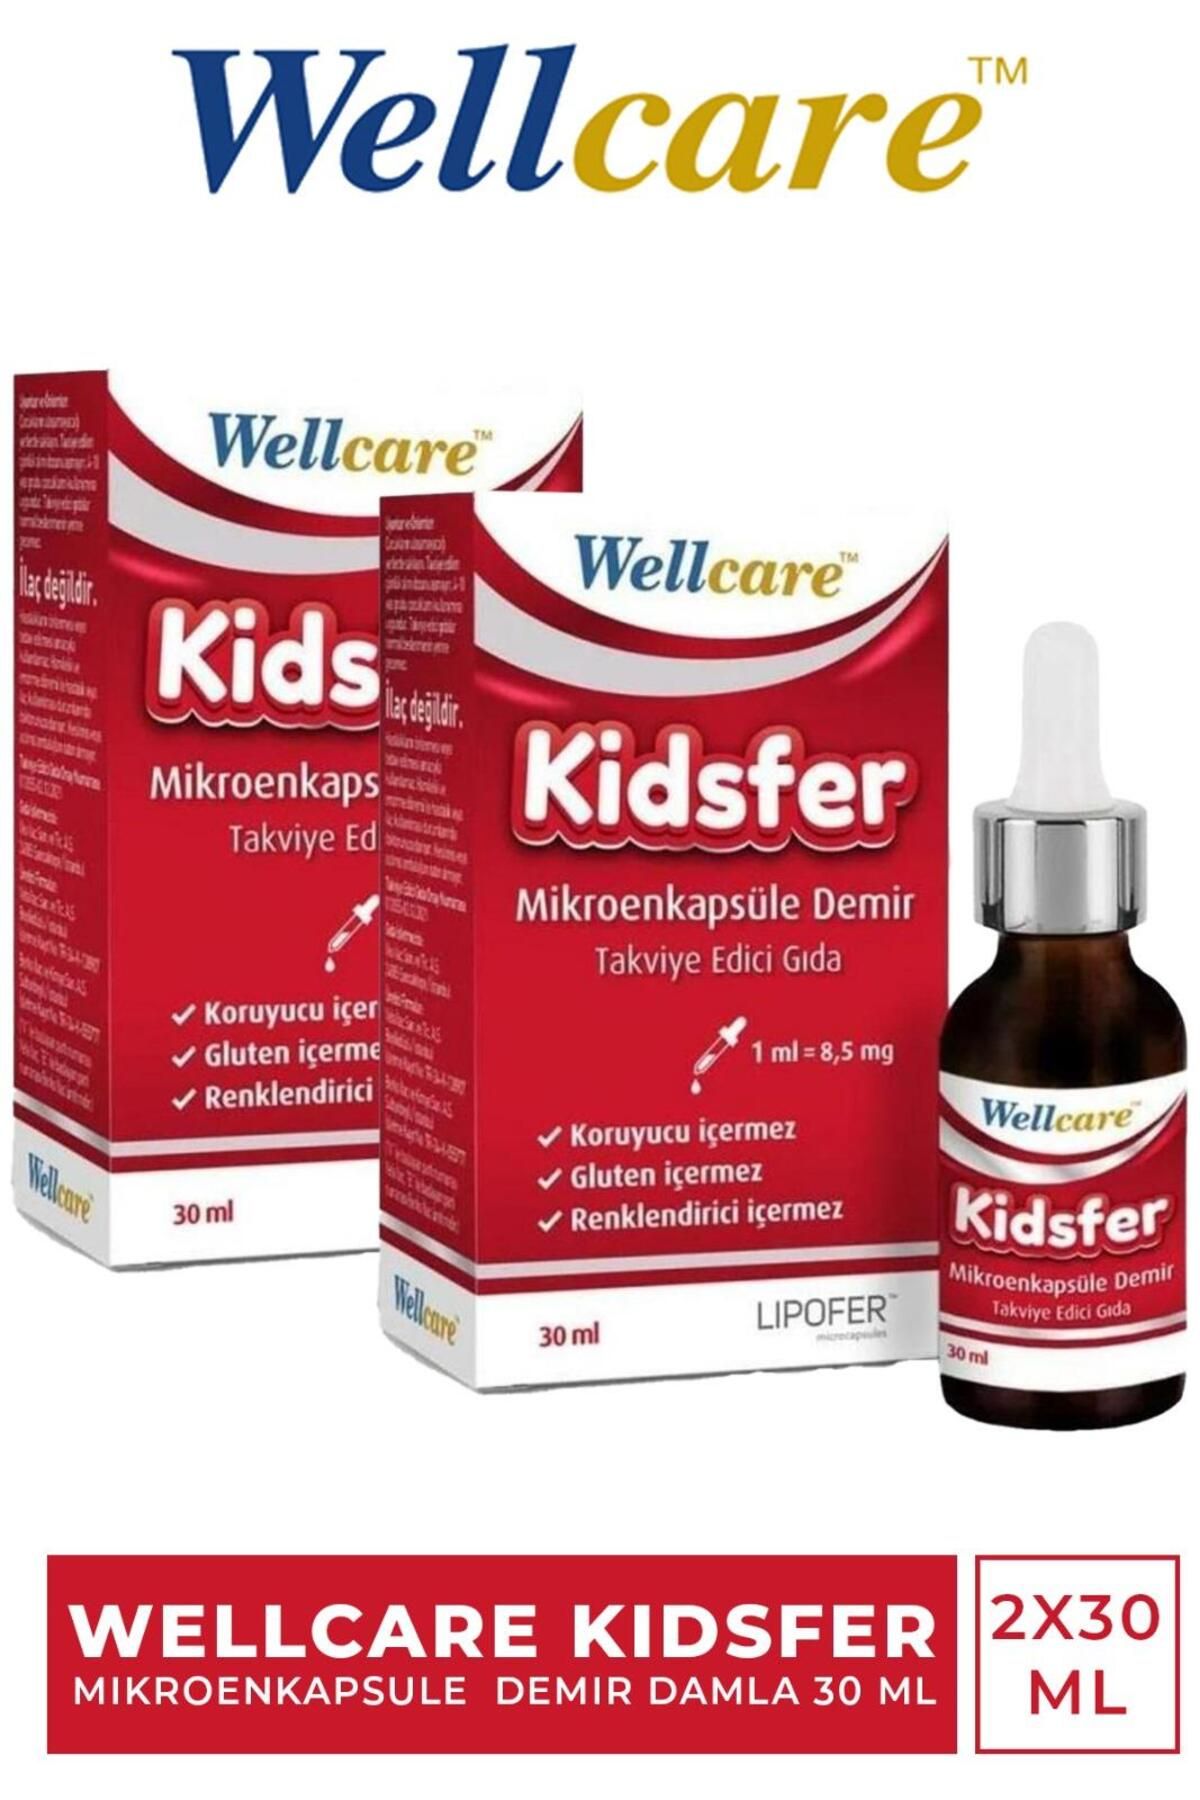 Wellcare Kidsfer Mikroenkapsule Demir Damla 30 ml 2 Adet